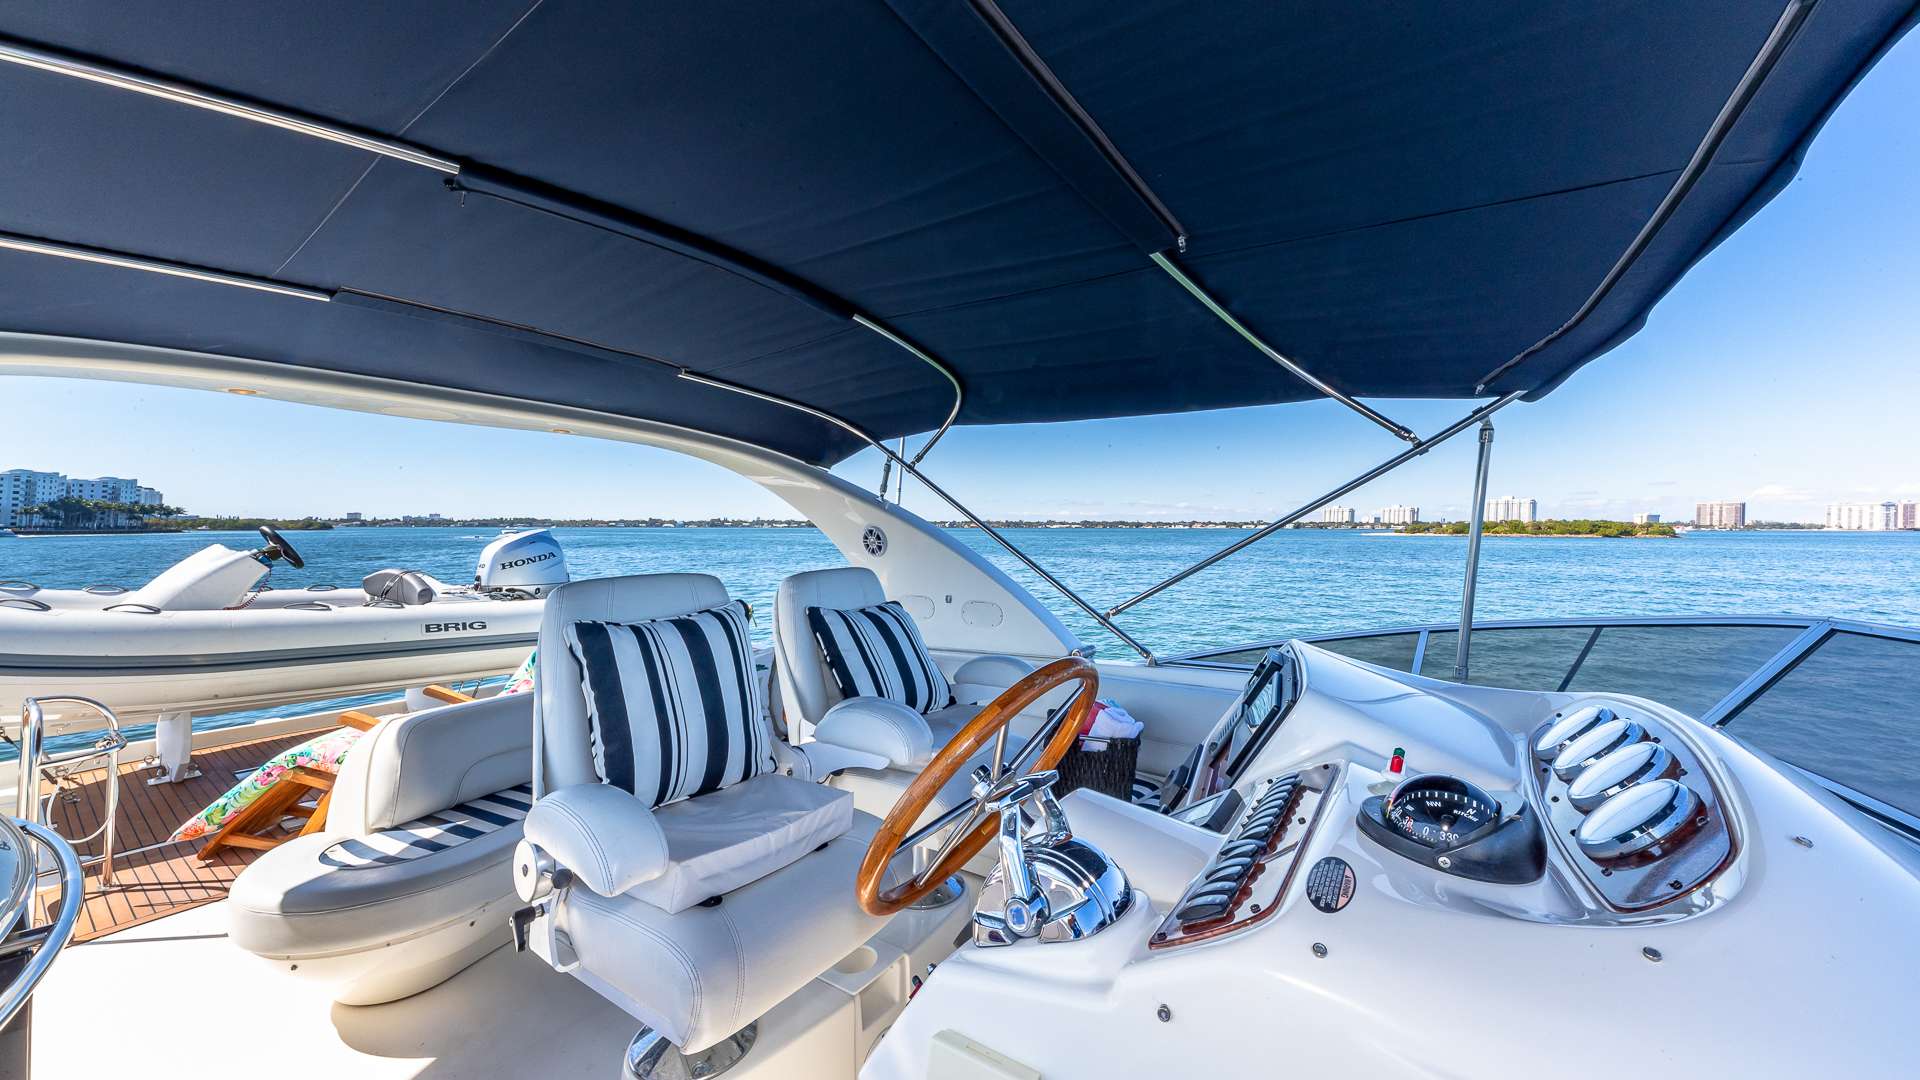 ELEGANT LADY - Motor Boat Charter USA & Boat hire in Florida & Bahamas 5